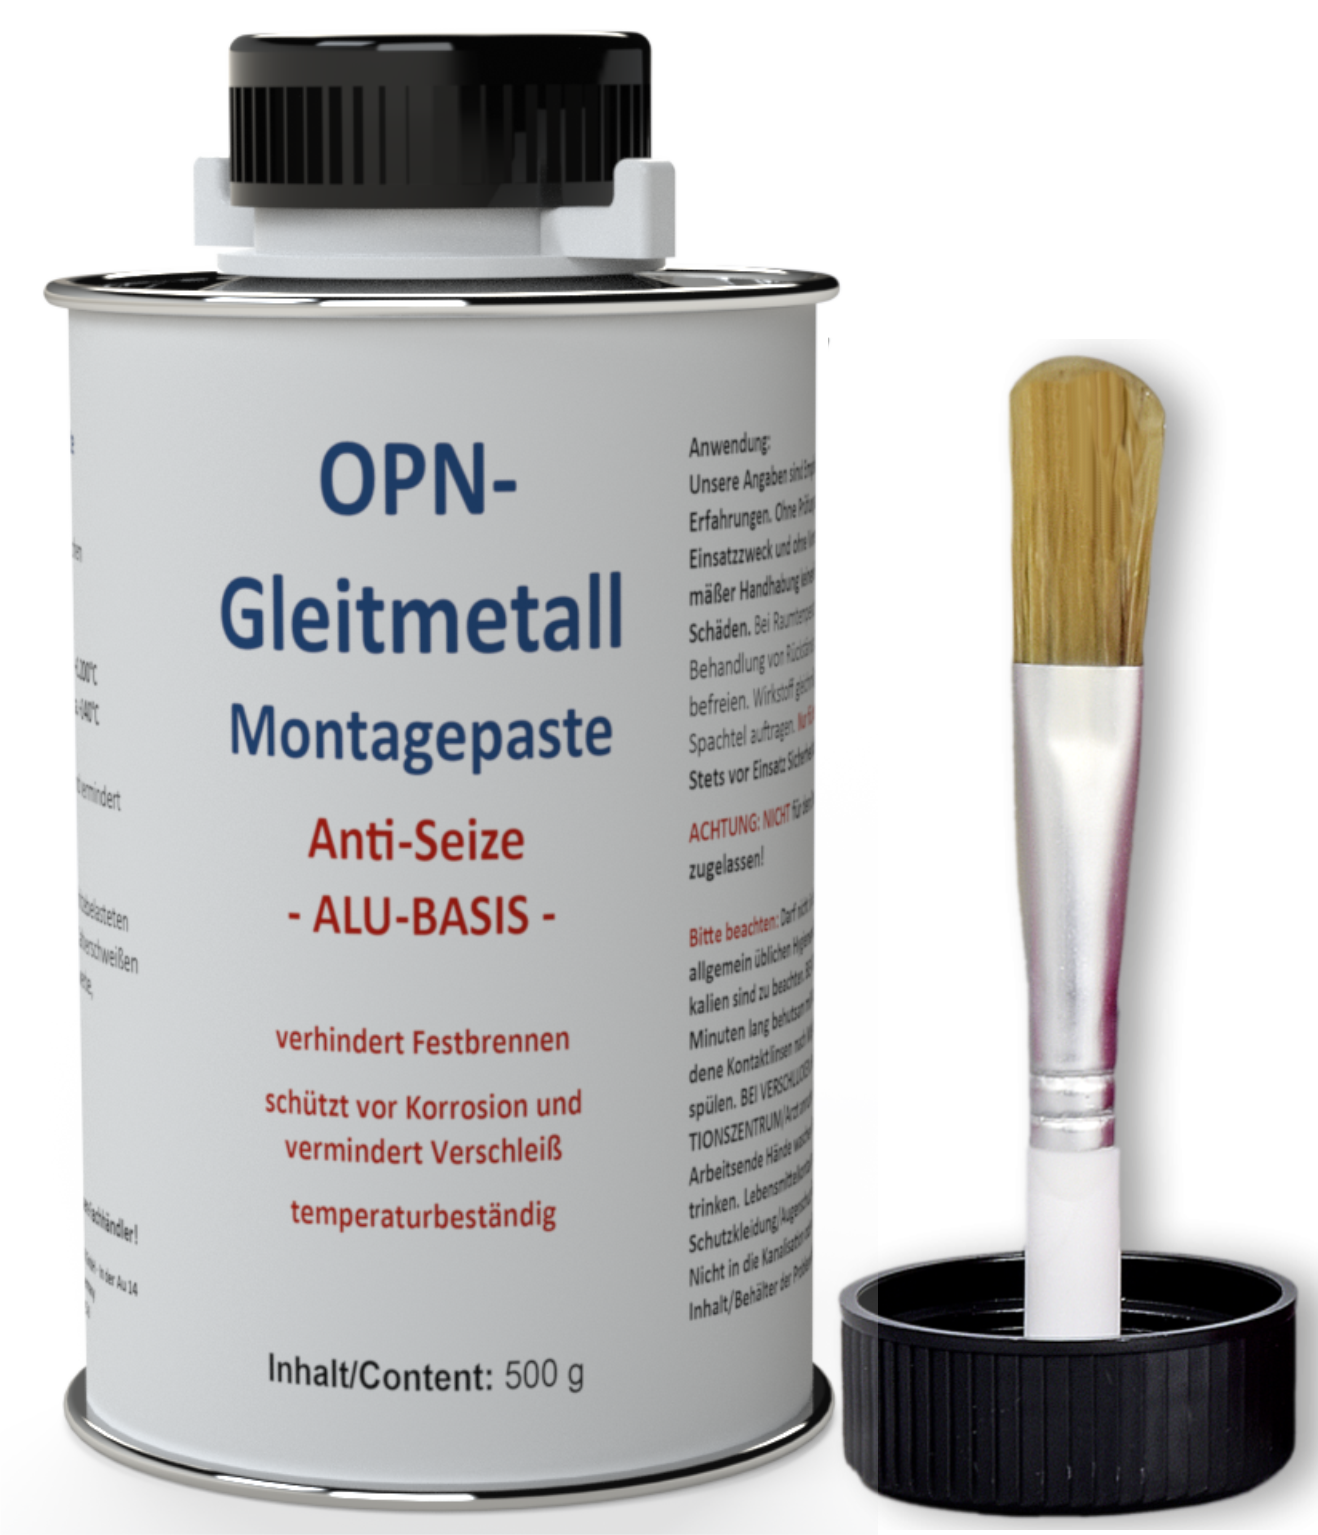 https://www.opn-chemie.de/wp-content/uploads/66075_Gleitmetallpaste_mit-Pinsel.png